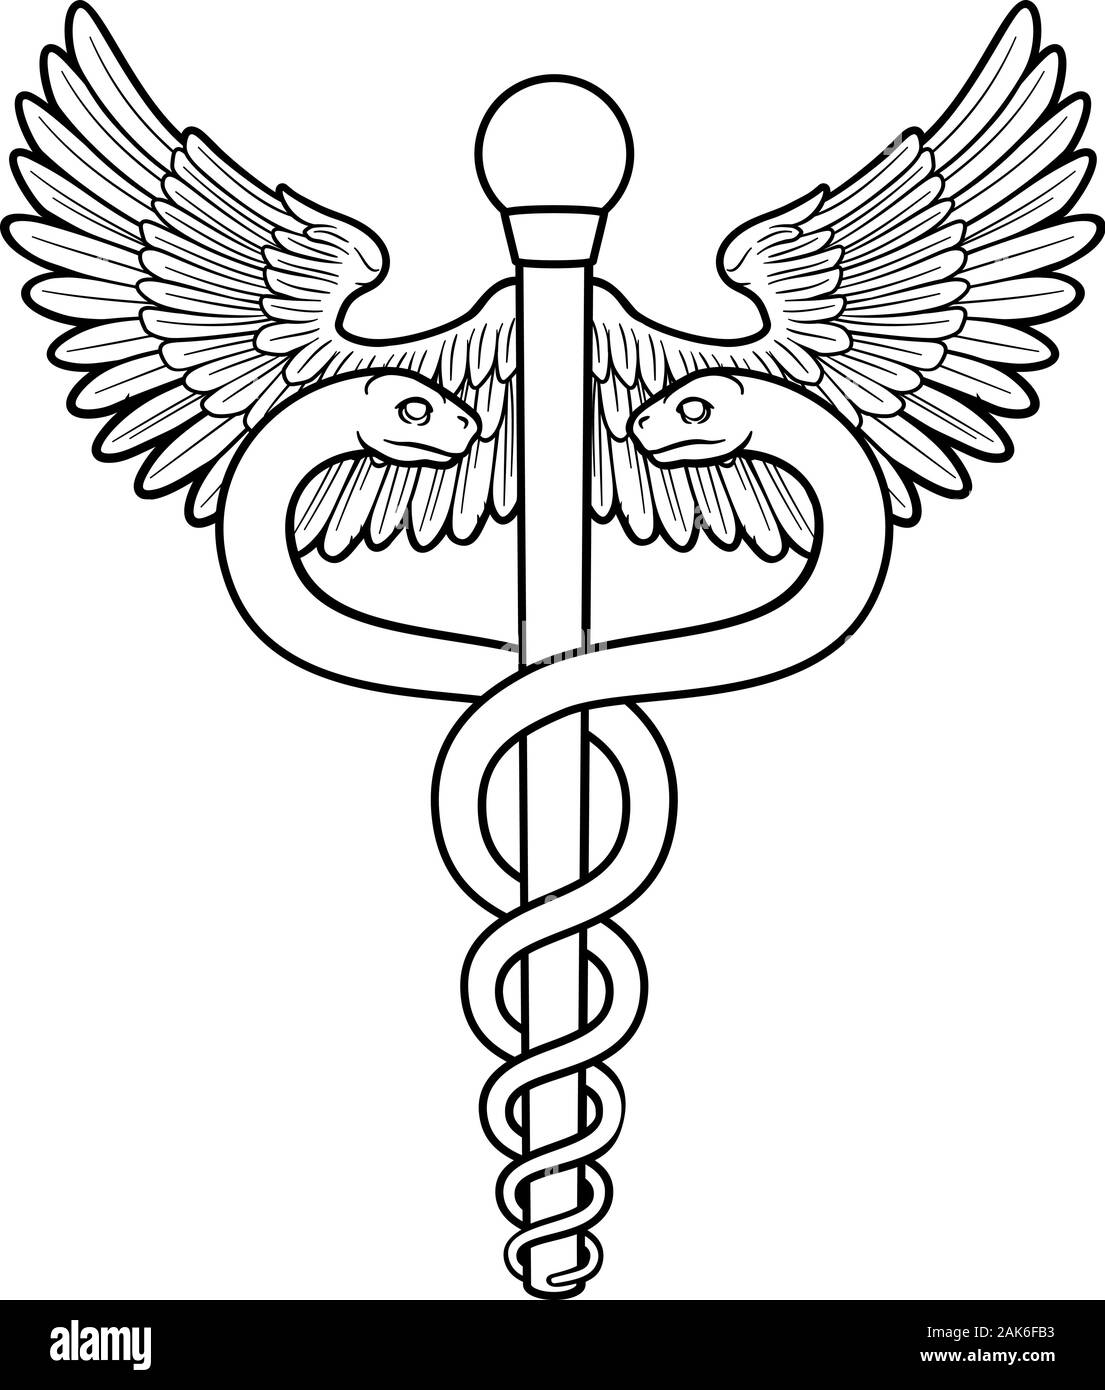 Caduceus Medical Doctor Symbol Stock Vector